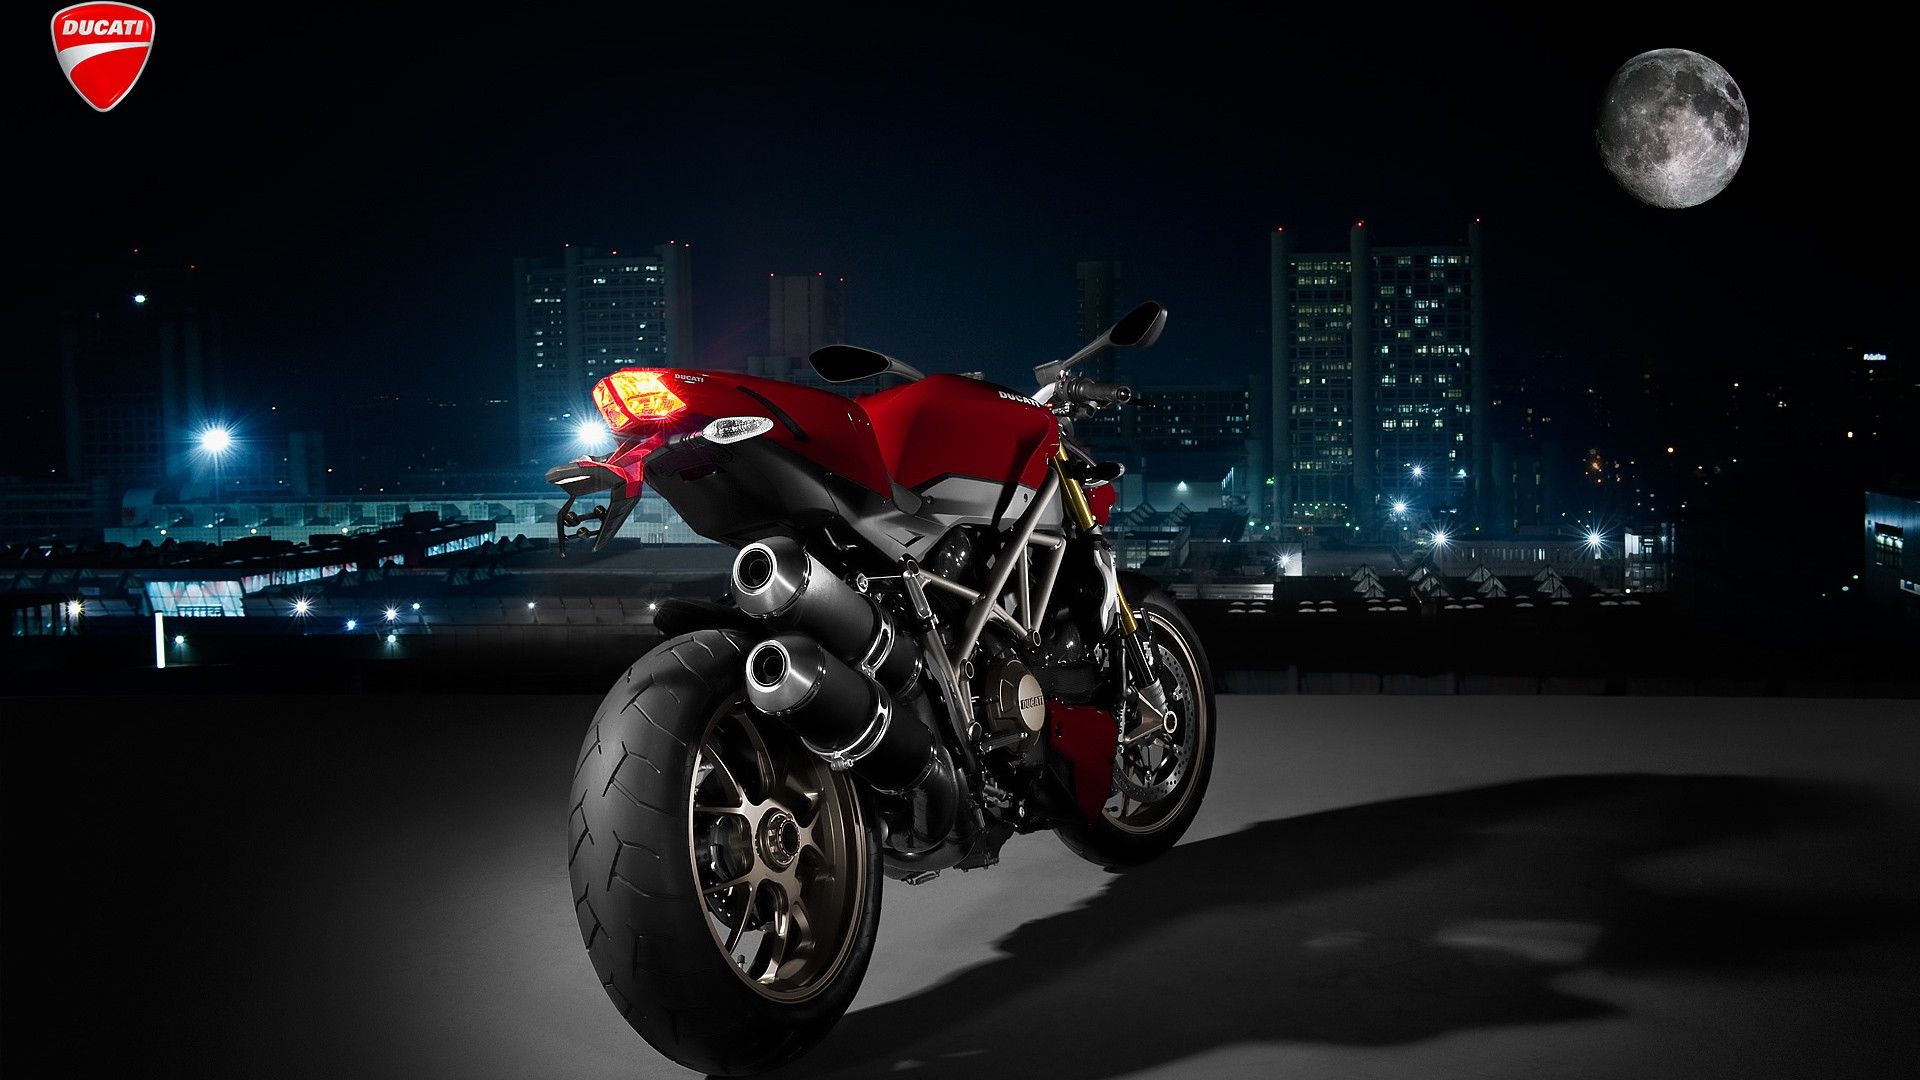 Ducati Bikes Wallpaper | Pictures of Ducati Motorcycles | Cool ...